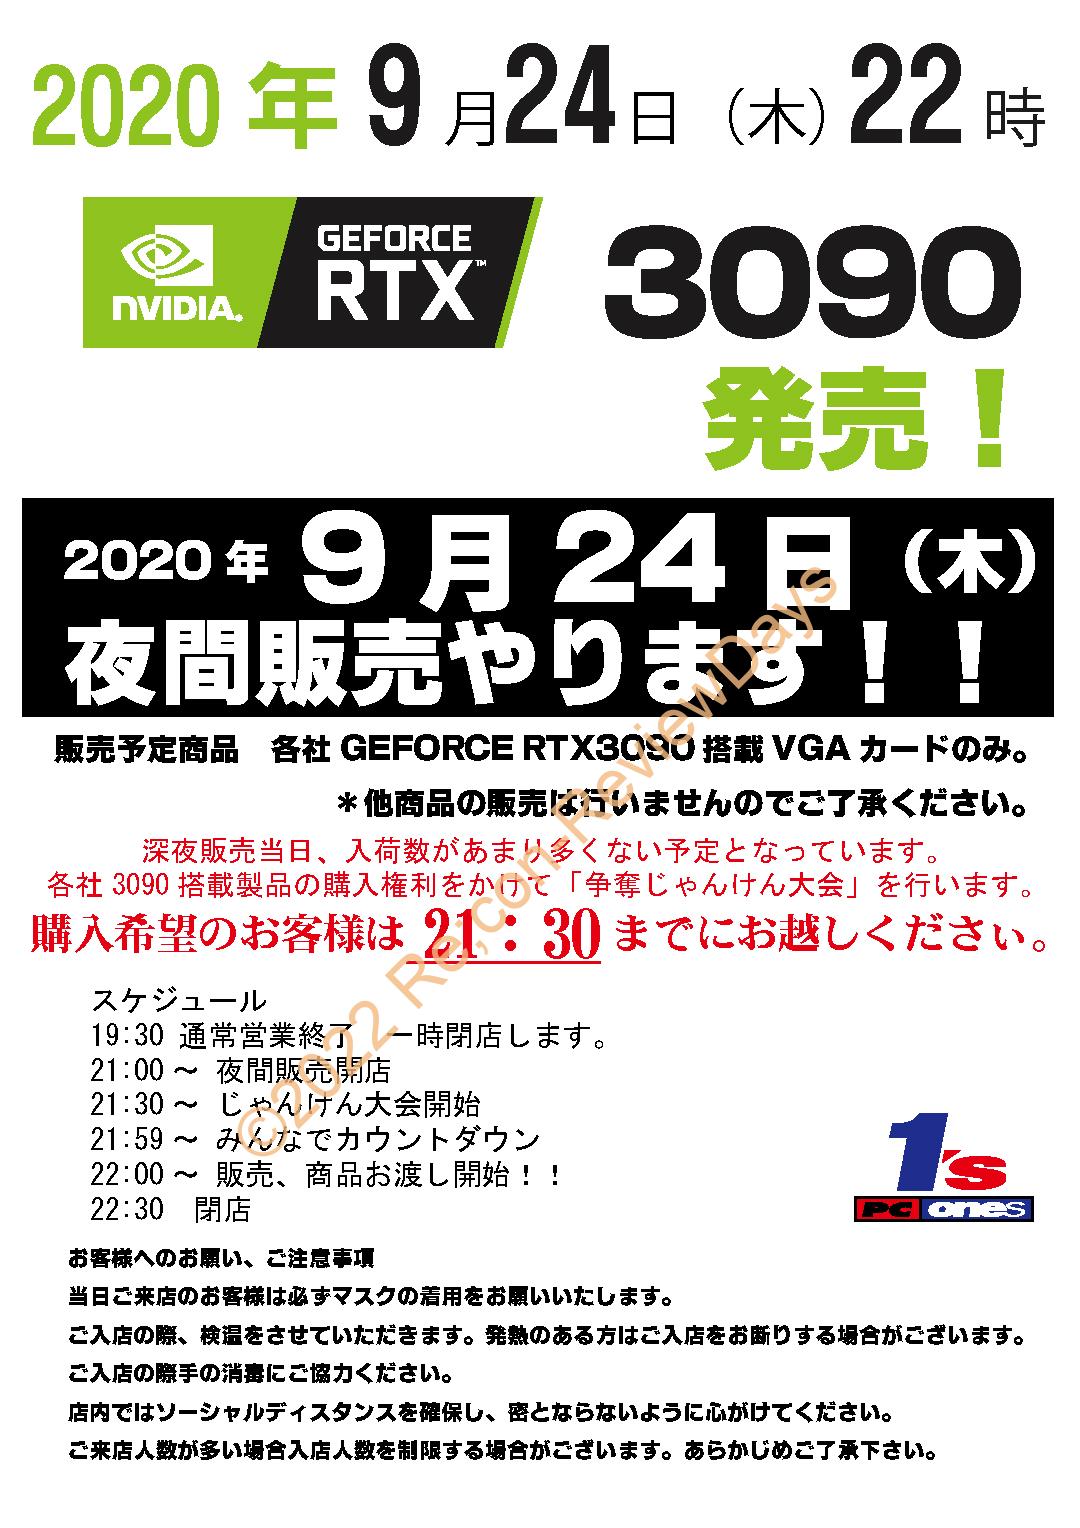 PCワンズにて2020年9月24日22時からGeForce RTX 3090 夜間販売を実施 #pombashi #ワンズ #GeForce #RTX3090 #Nvidia